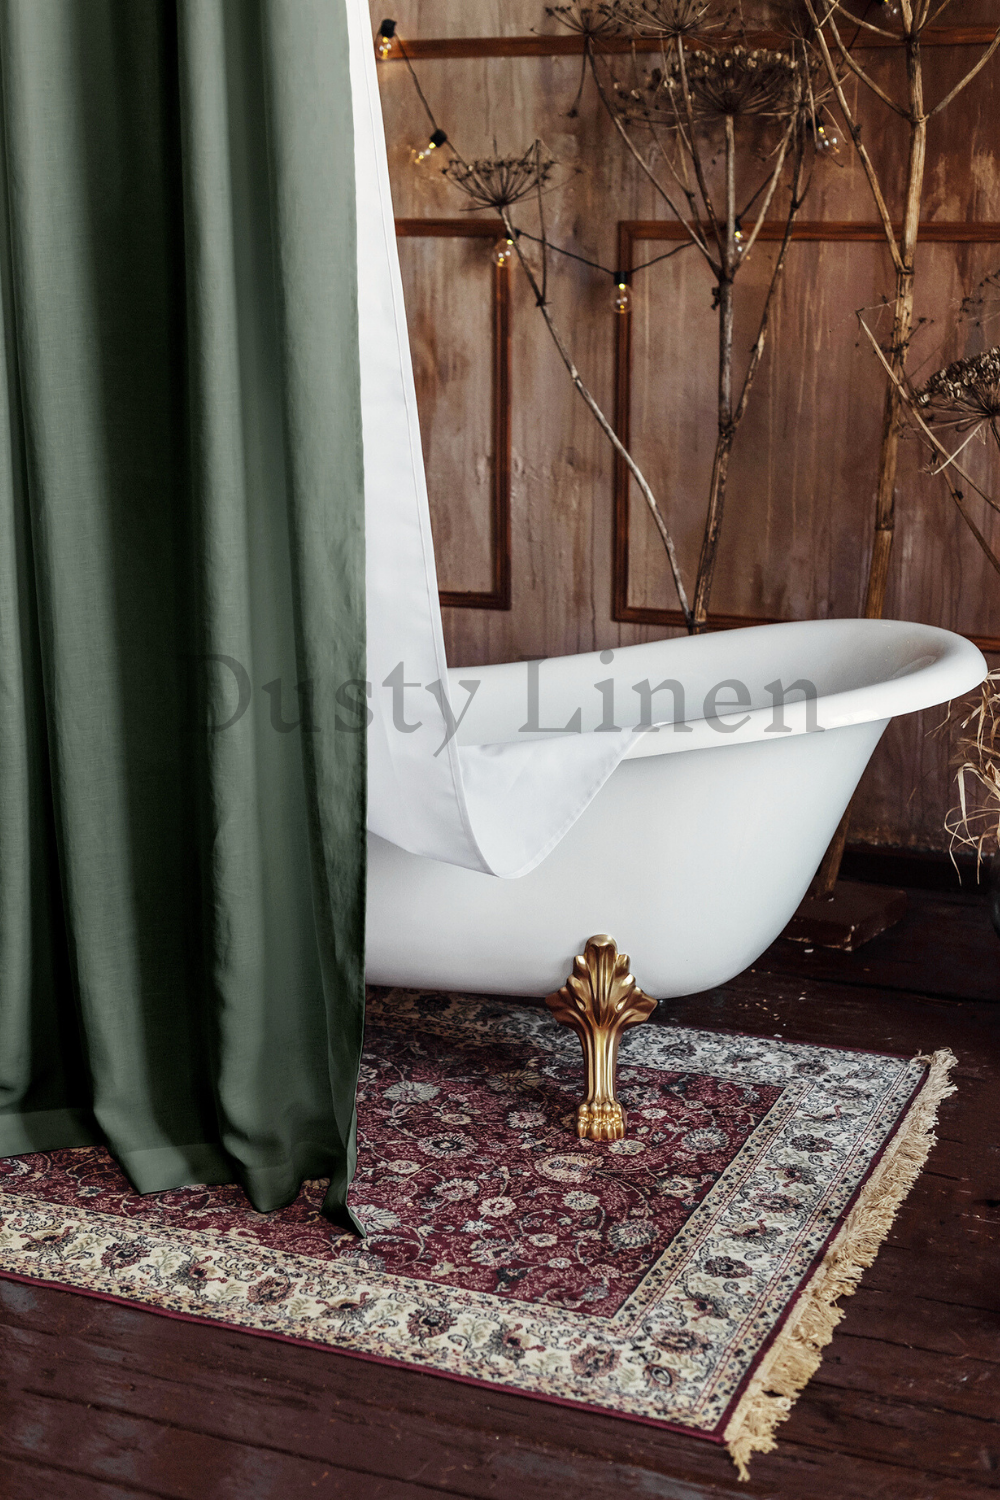 Bathroom decore with DustyLinen green custom shower curtain.